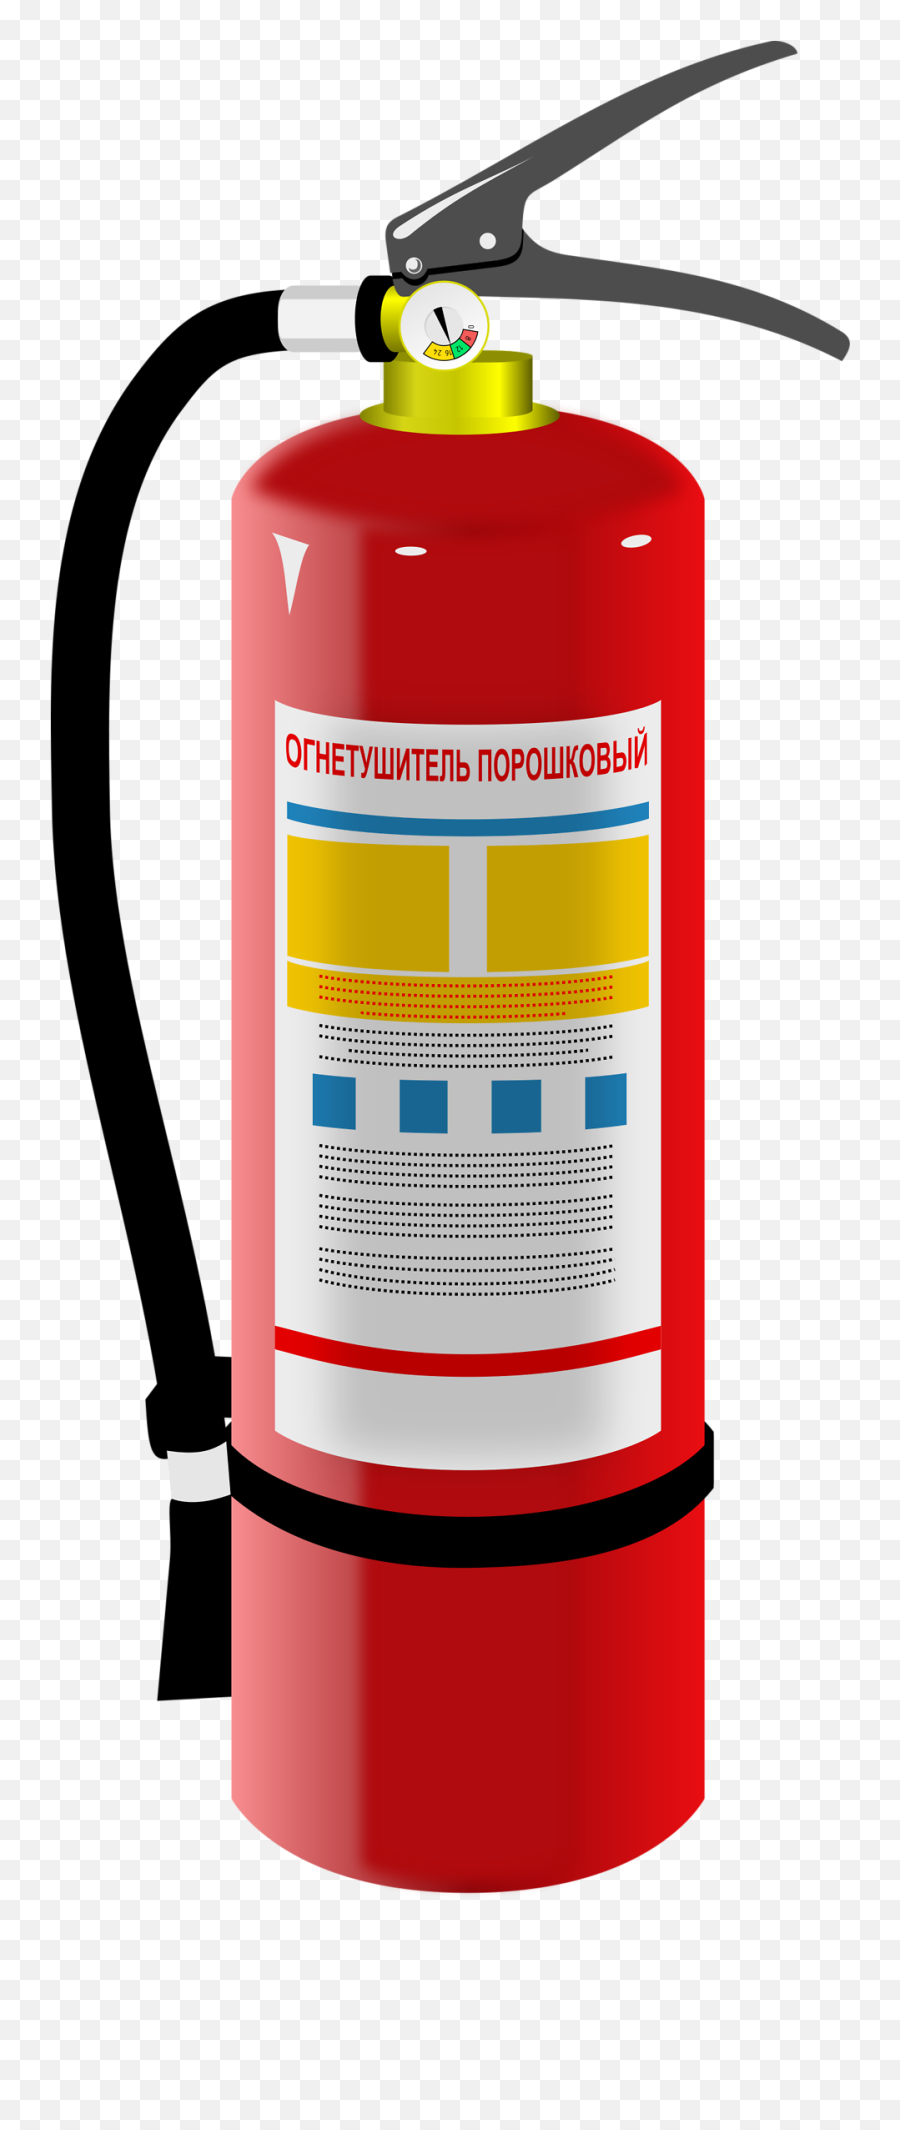 Flame Clipart Emoji Picture - Fire Extinguisher Clipart Transparent Background,Emoji Flame